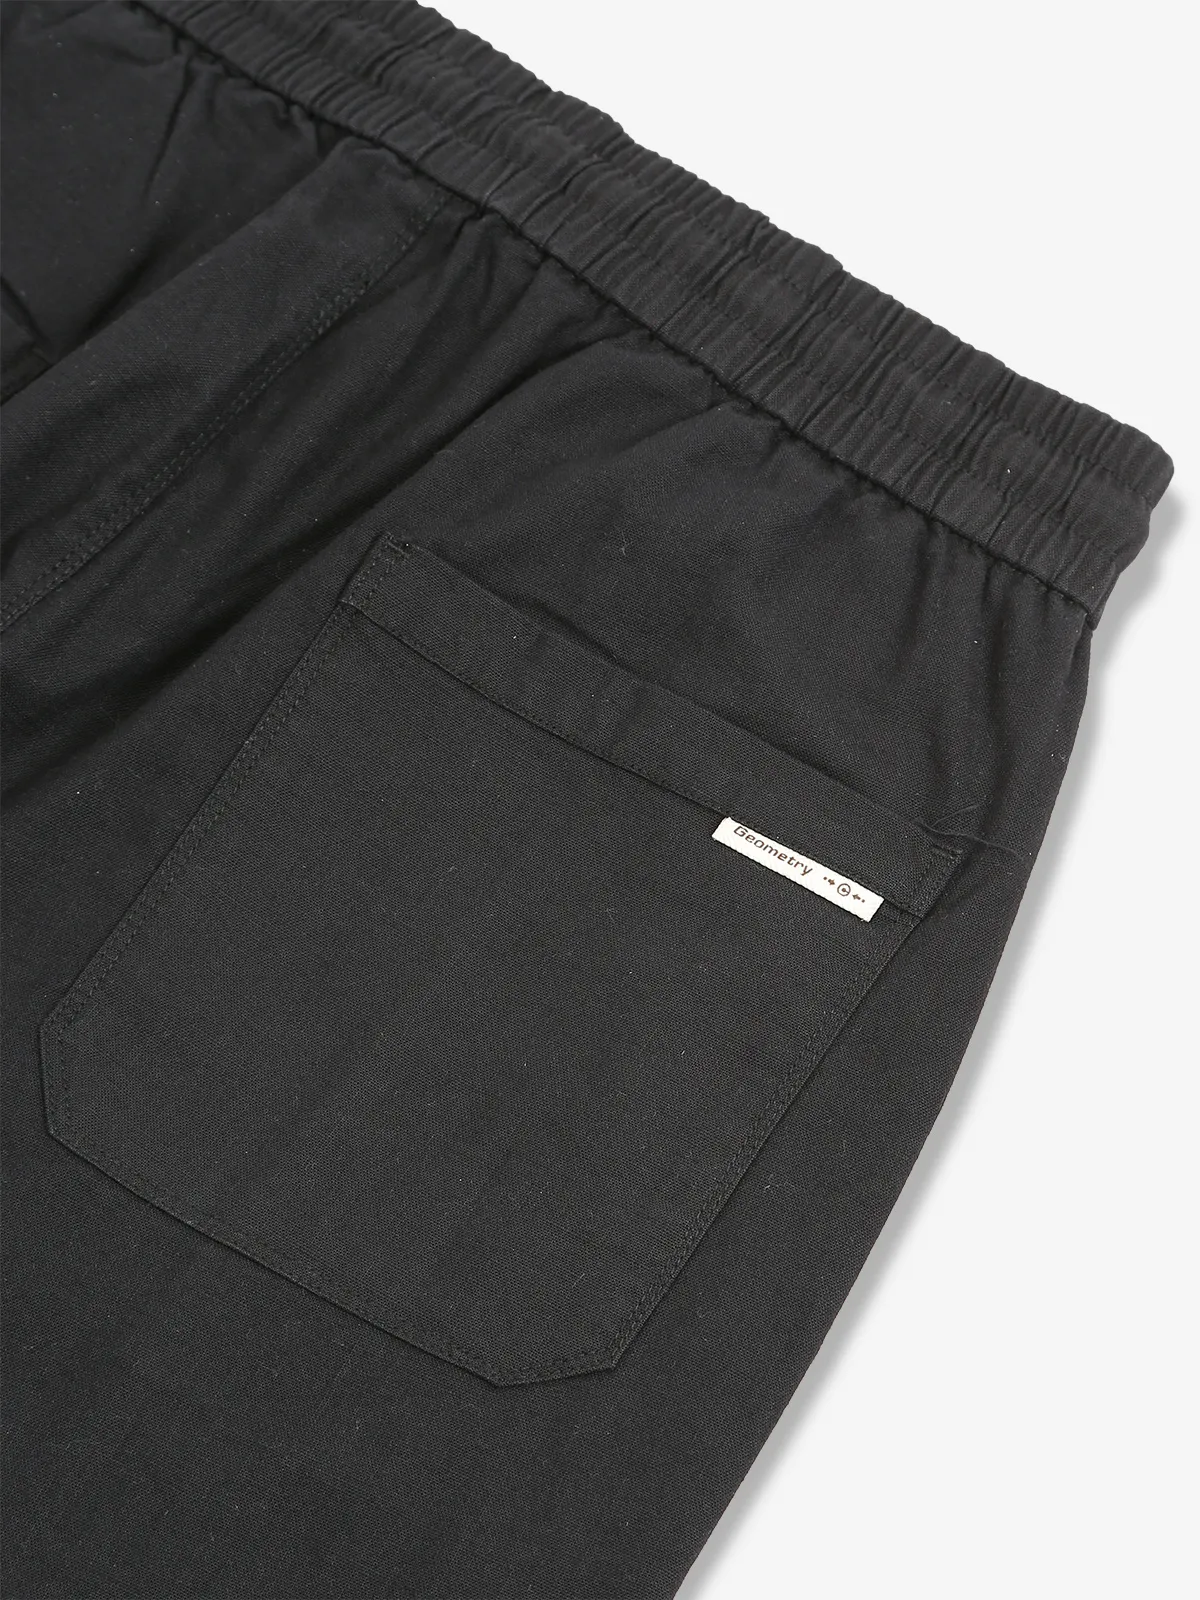 GS78 solid black cotton track pant